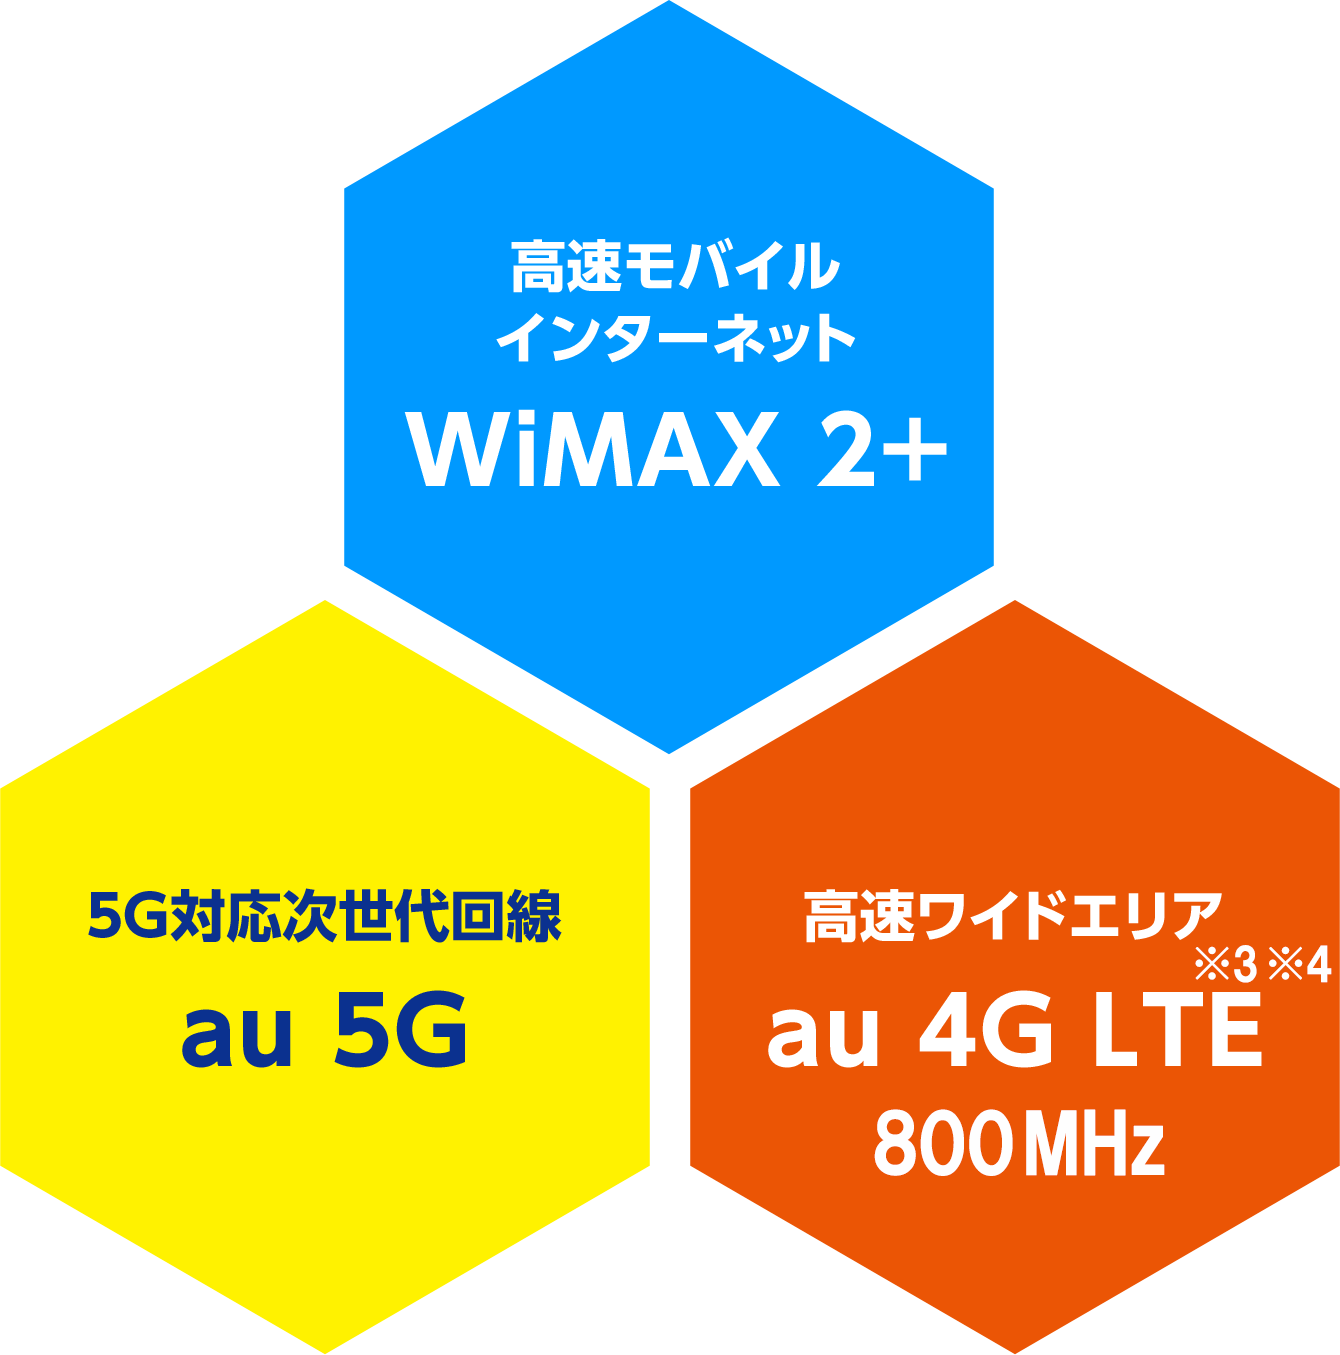 WiMAX 2+ 高速モバイルインターネット au 5G 5G対応次世代回線 au 4G LTE※3※4 800MHz 高速ワイドエリア